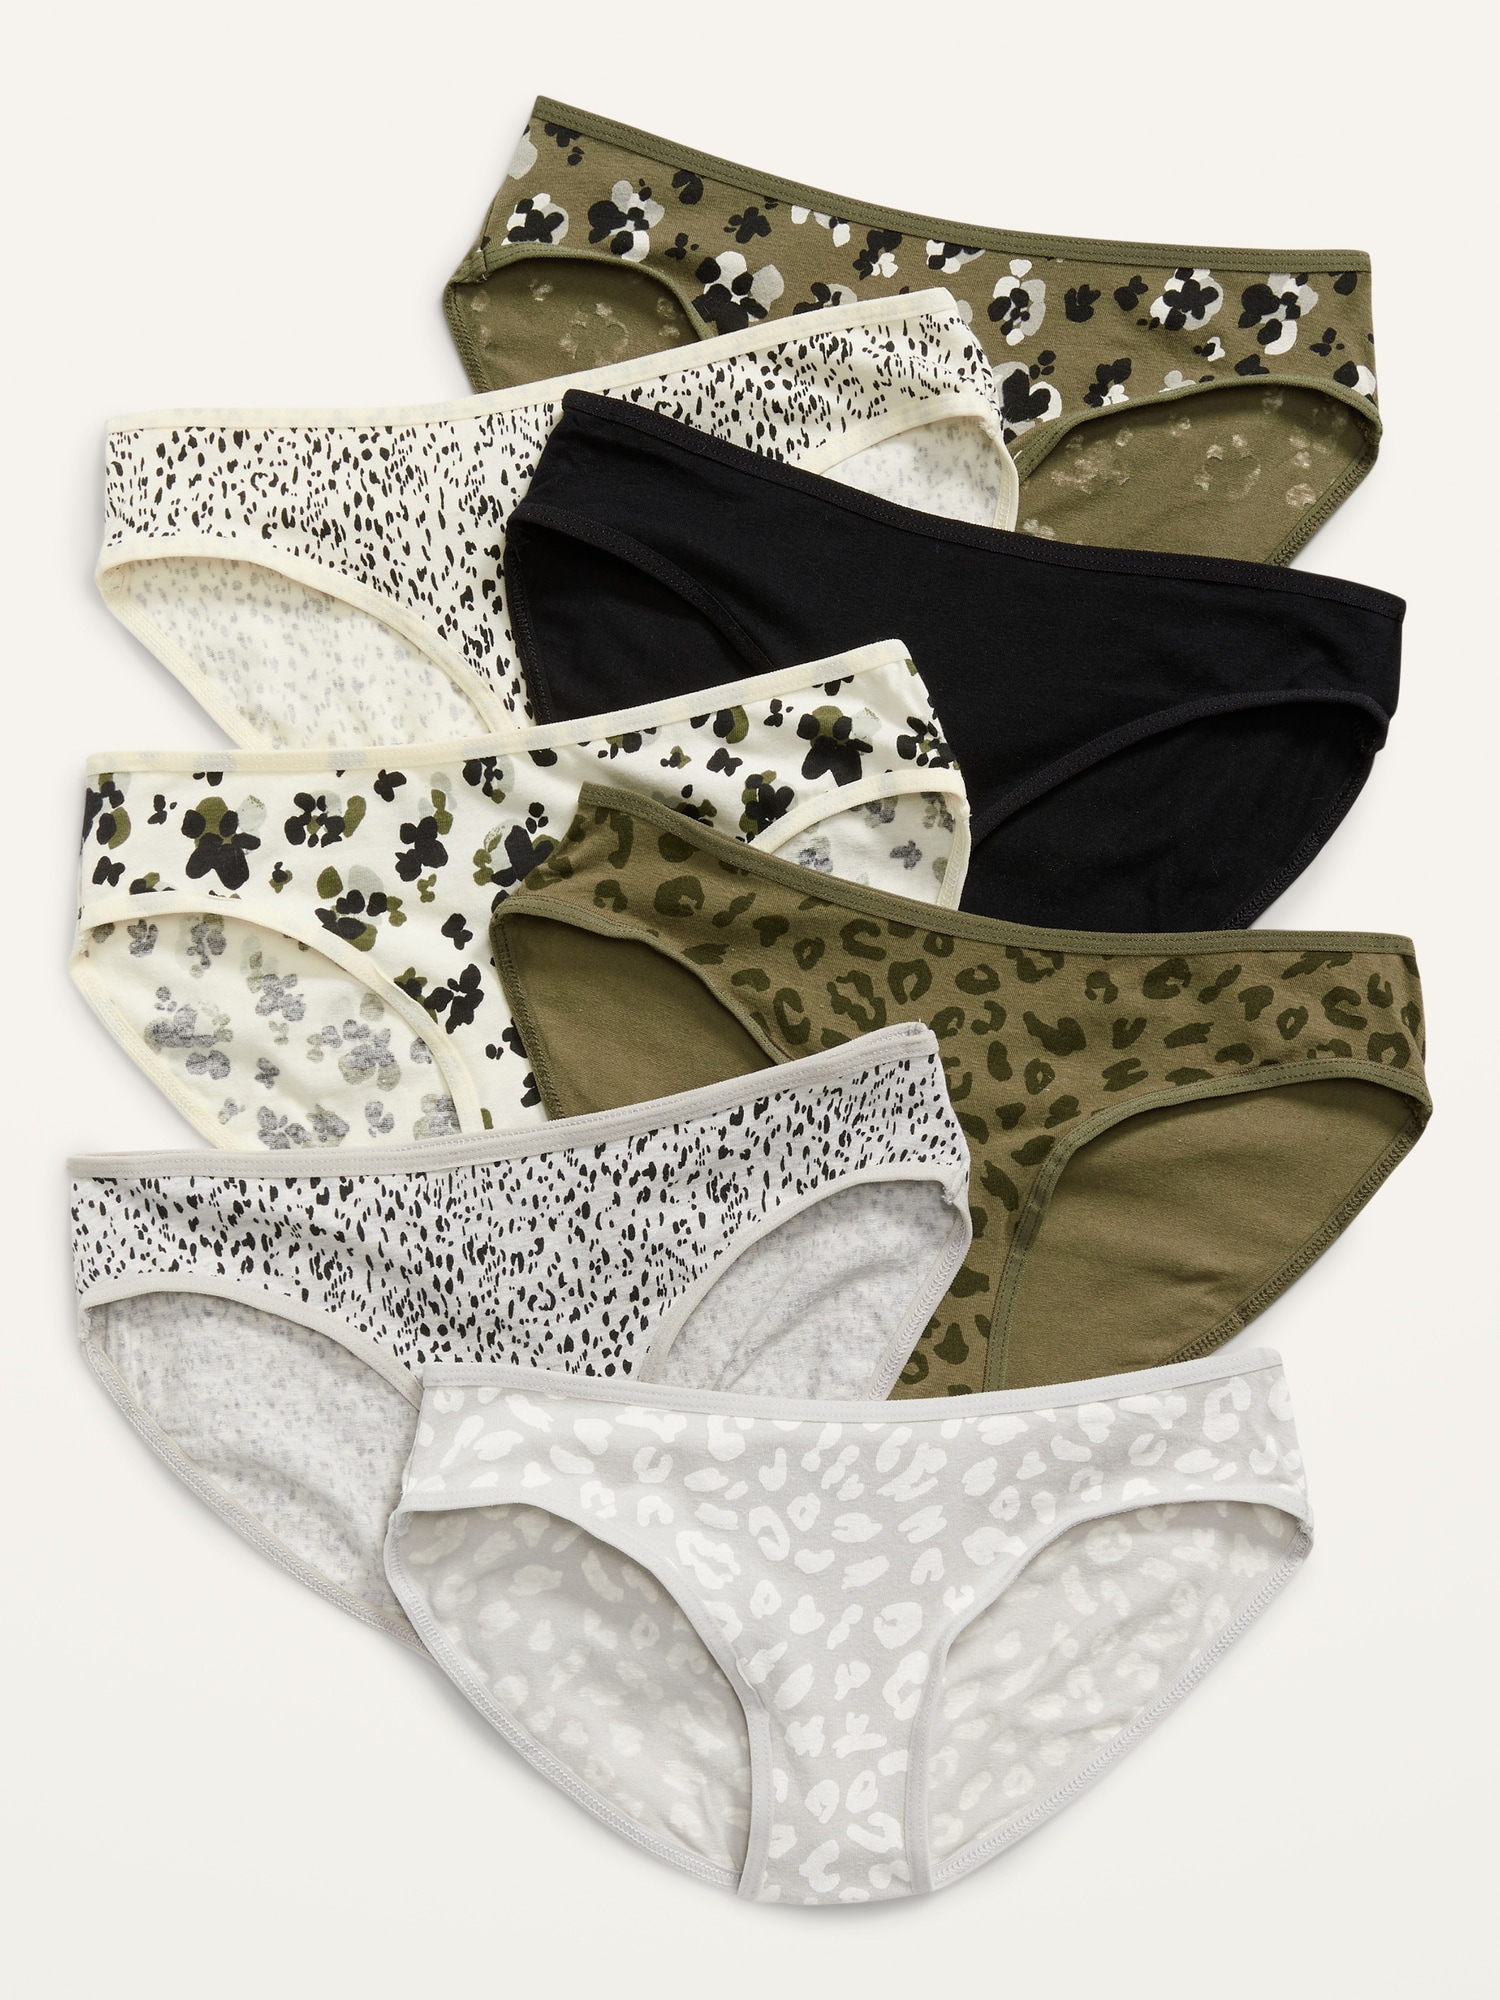 Gildan Girls Underwear, 18 Pack Bikini Cotton Panties, Size 8 